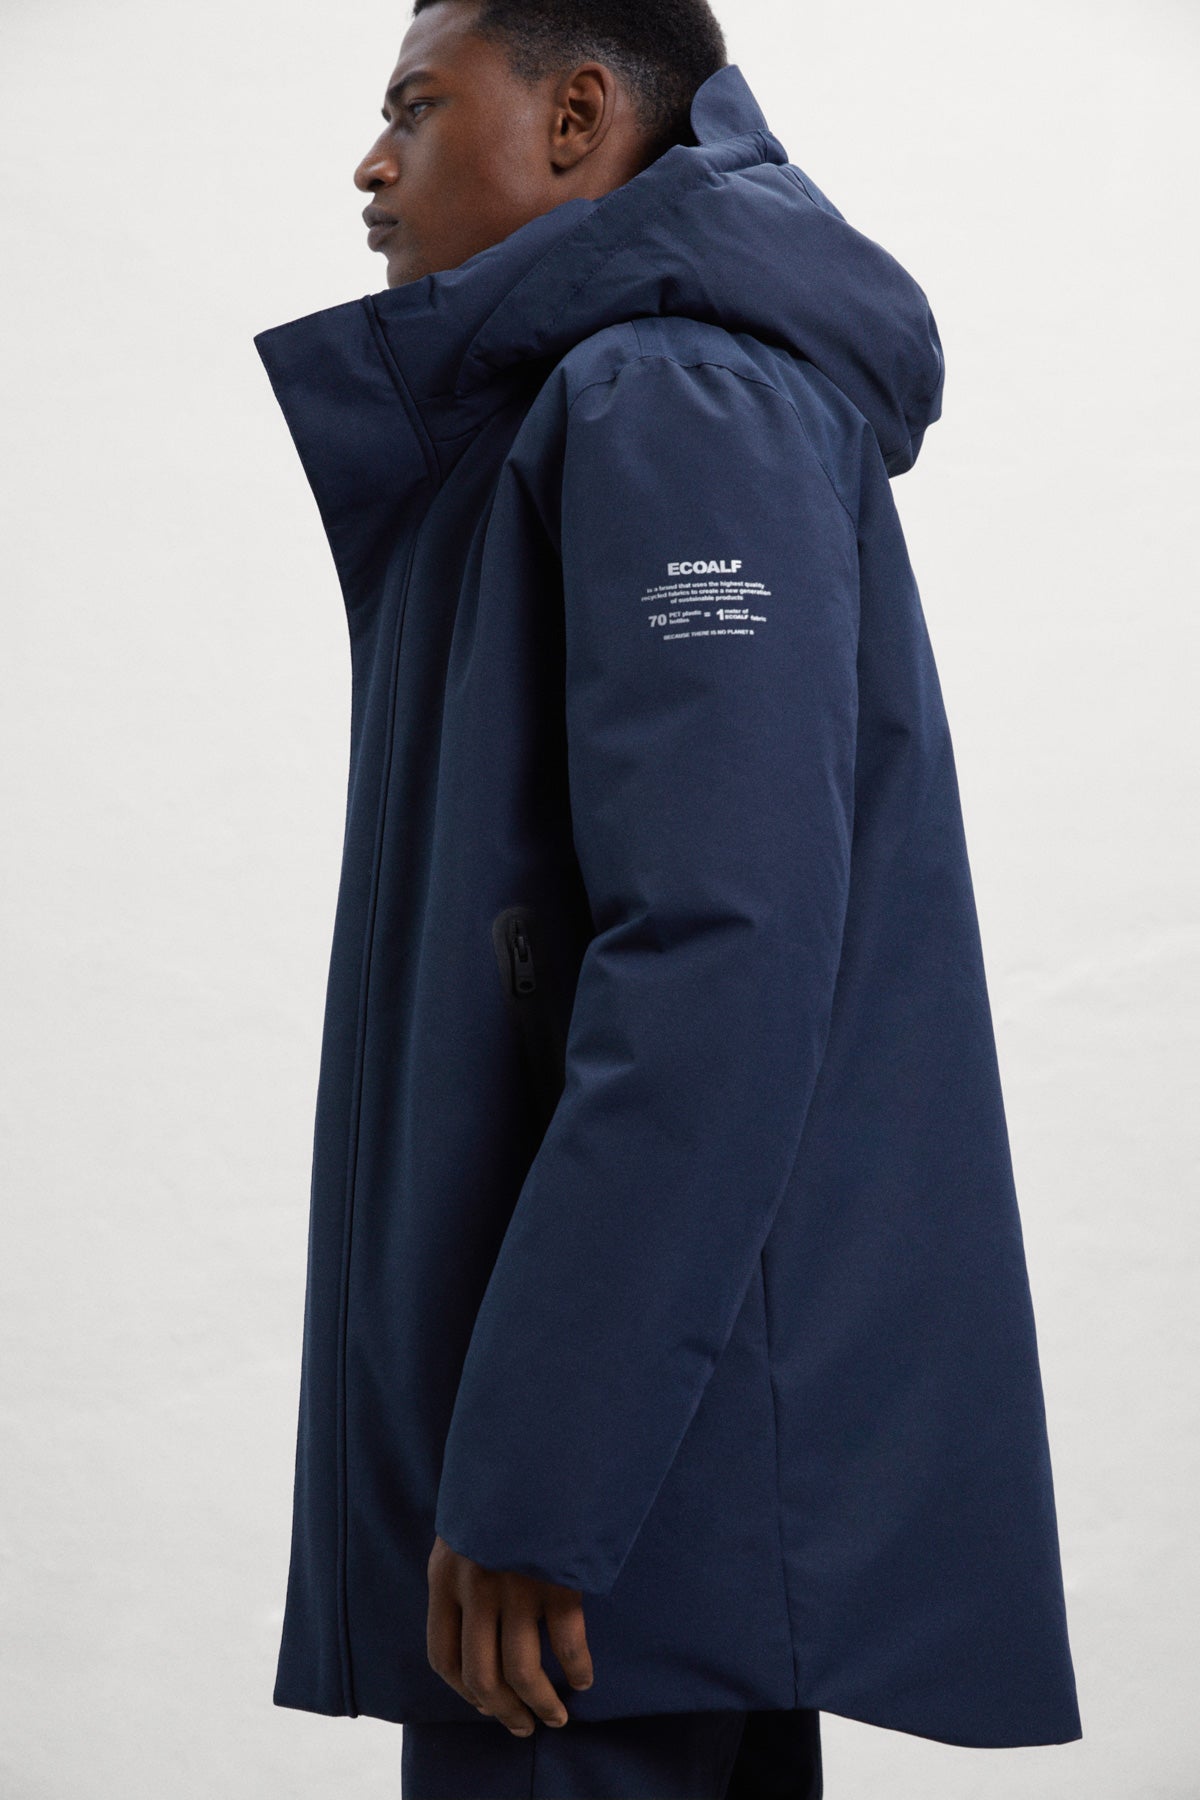 Parko waterproof coat with a hood for the rain | ECOALF